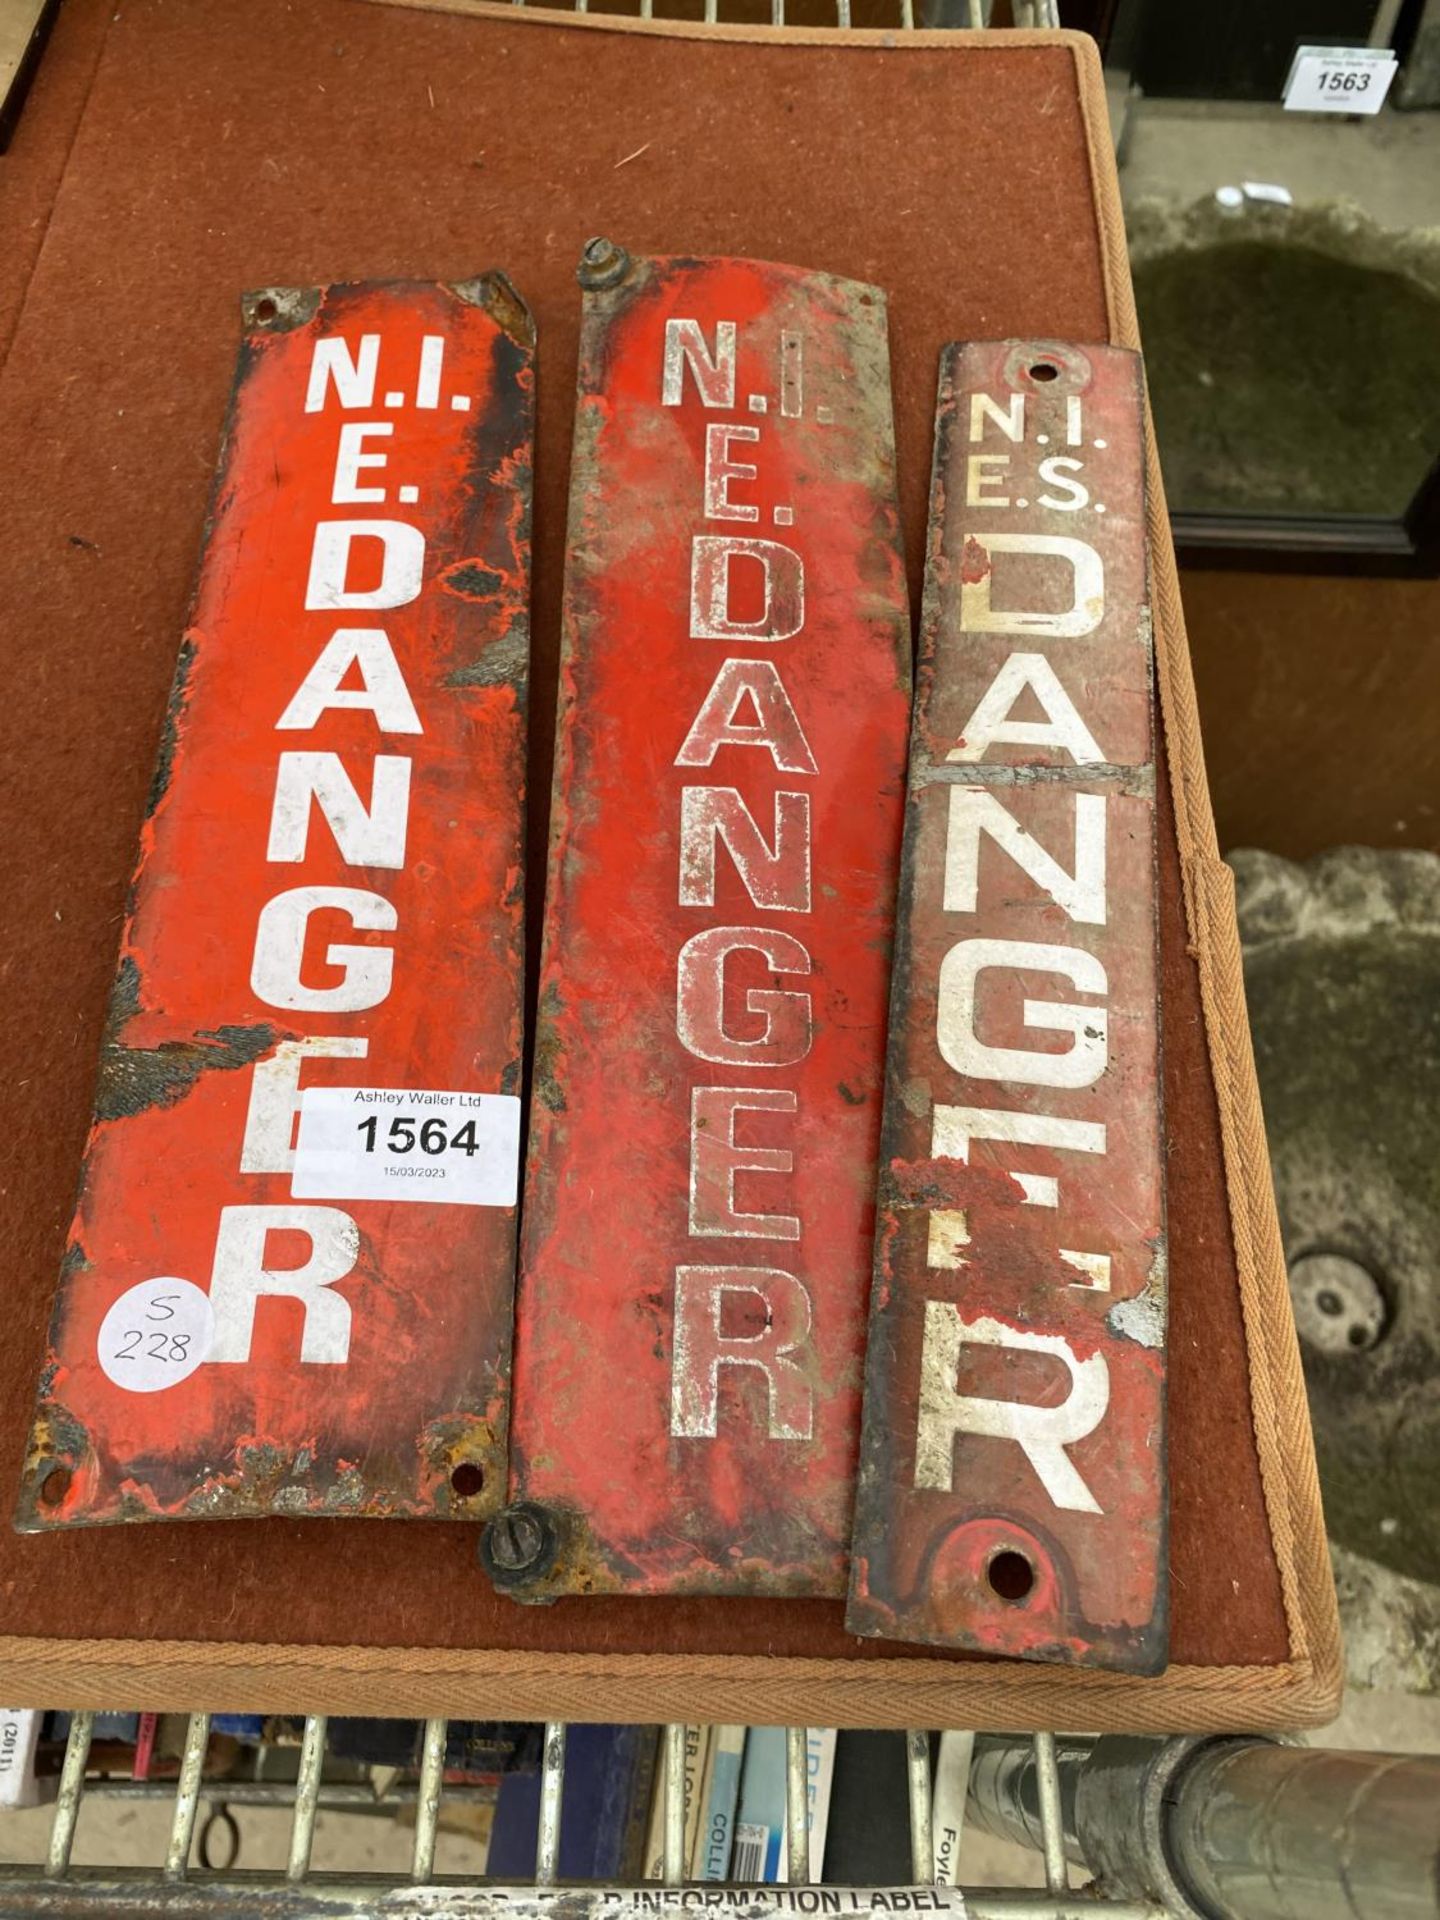 THREE VINTAGE METAL 'N.I.E DANGER' SIGNS